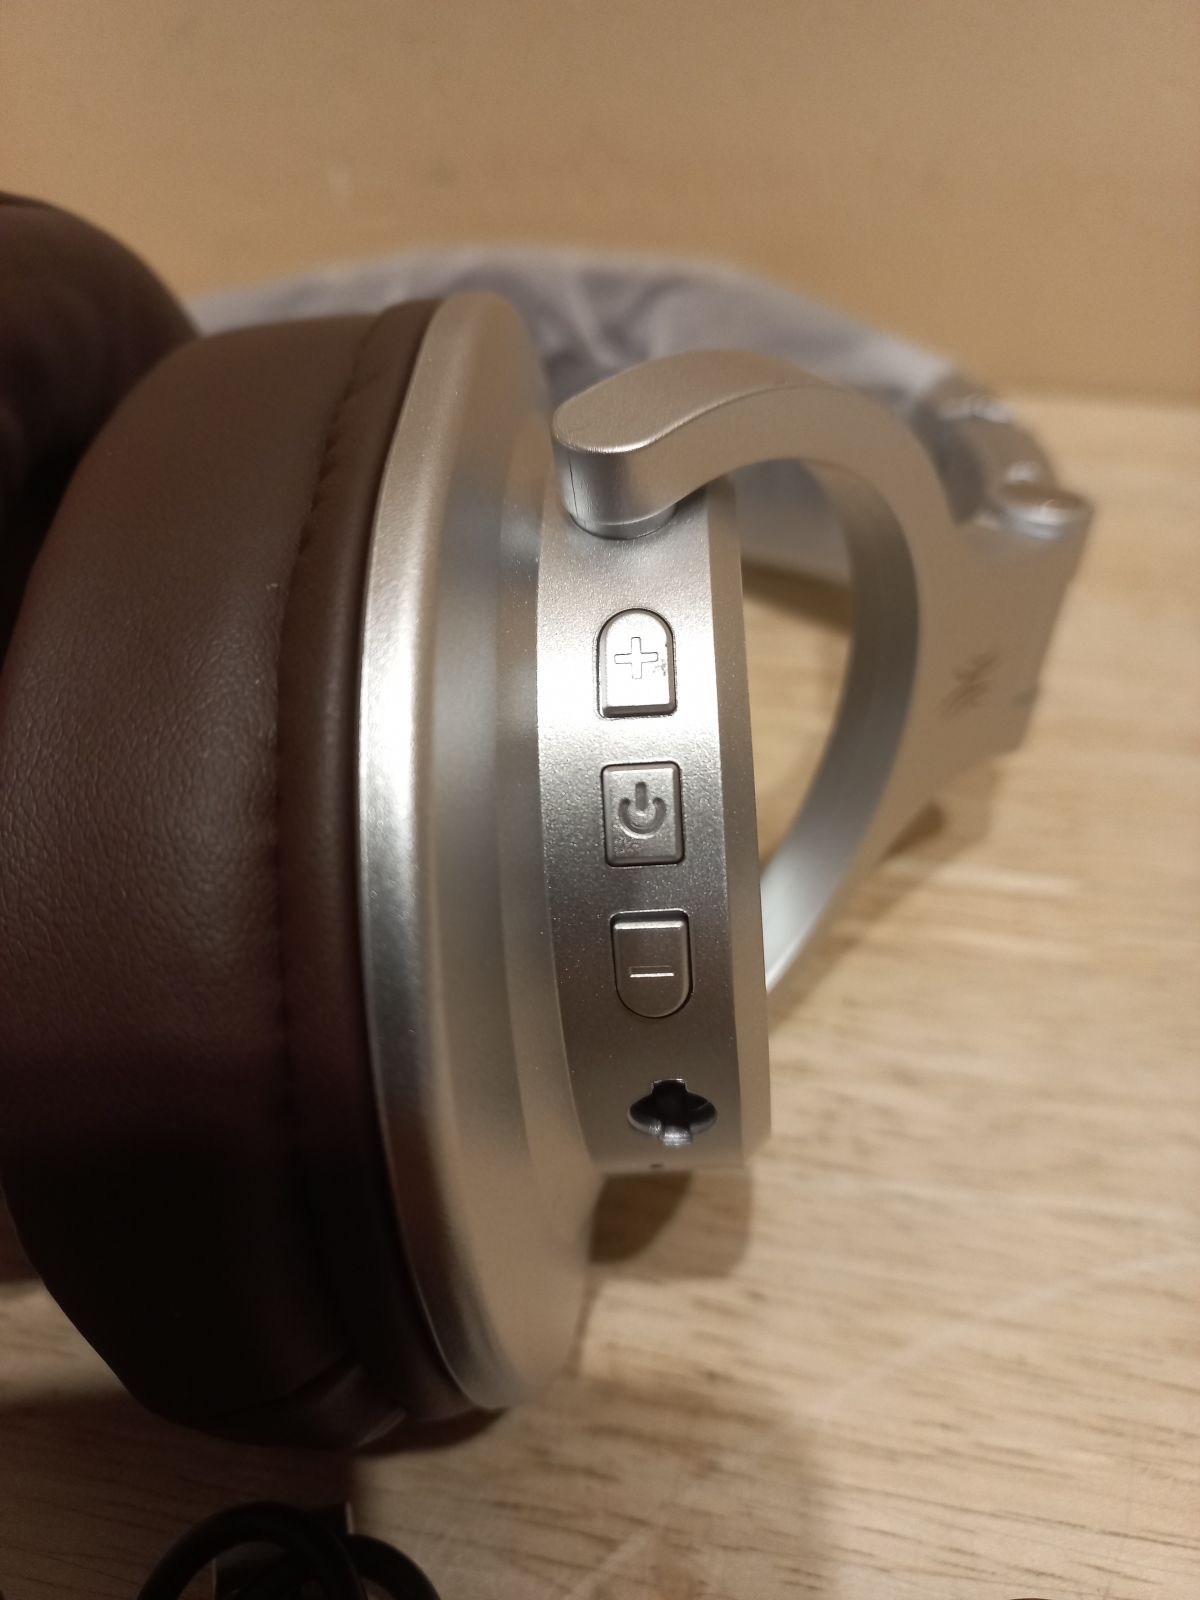 OneOdio on-ear Bluetooth headphones